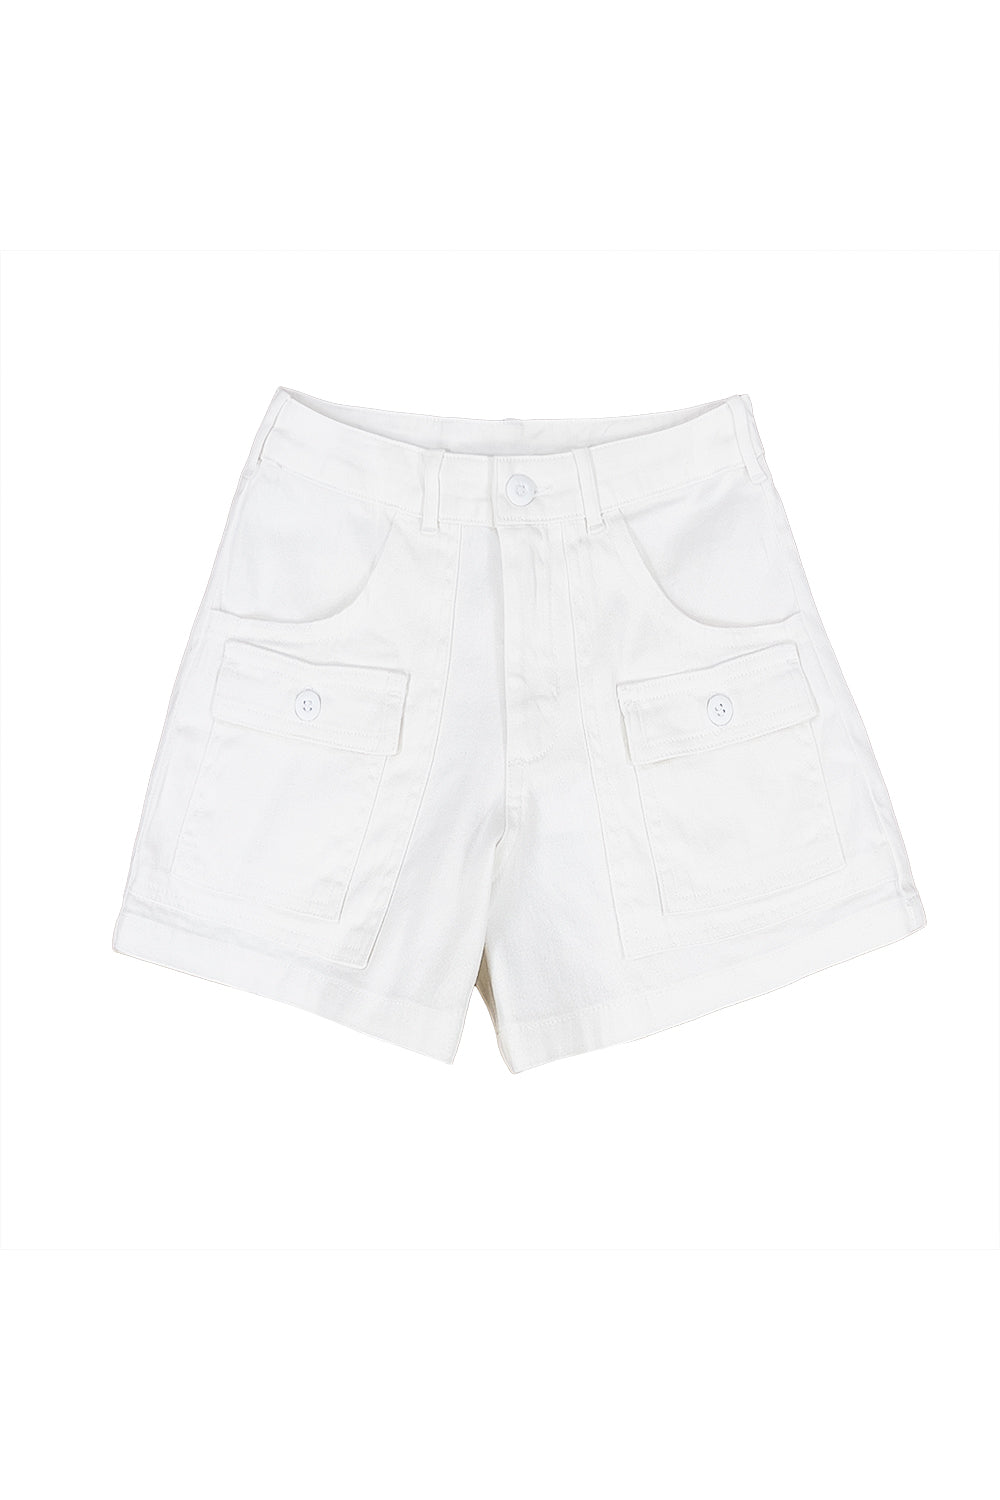 Paradise Short | Jungmaven Hemp Clothing & Accessories / Color: Washed White